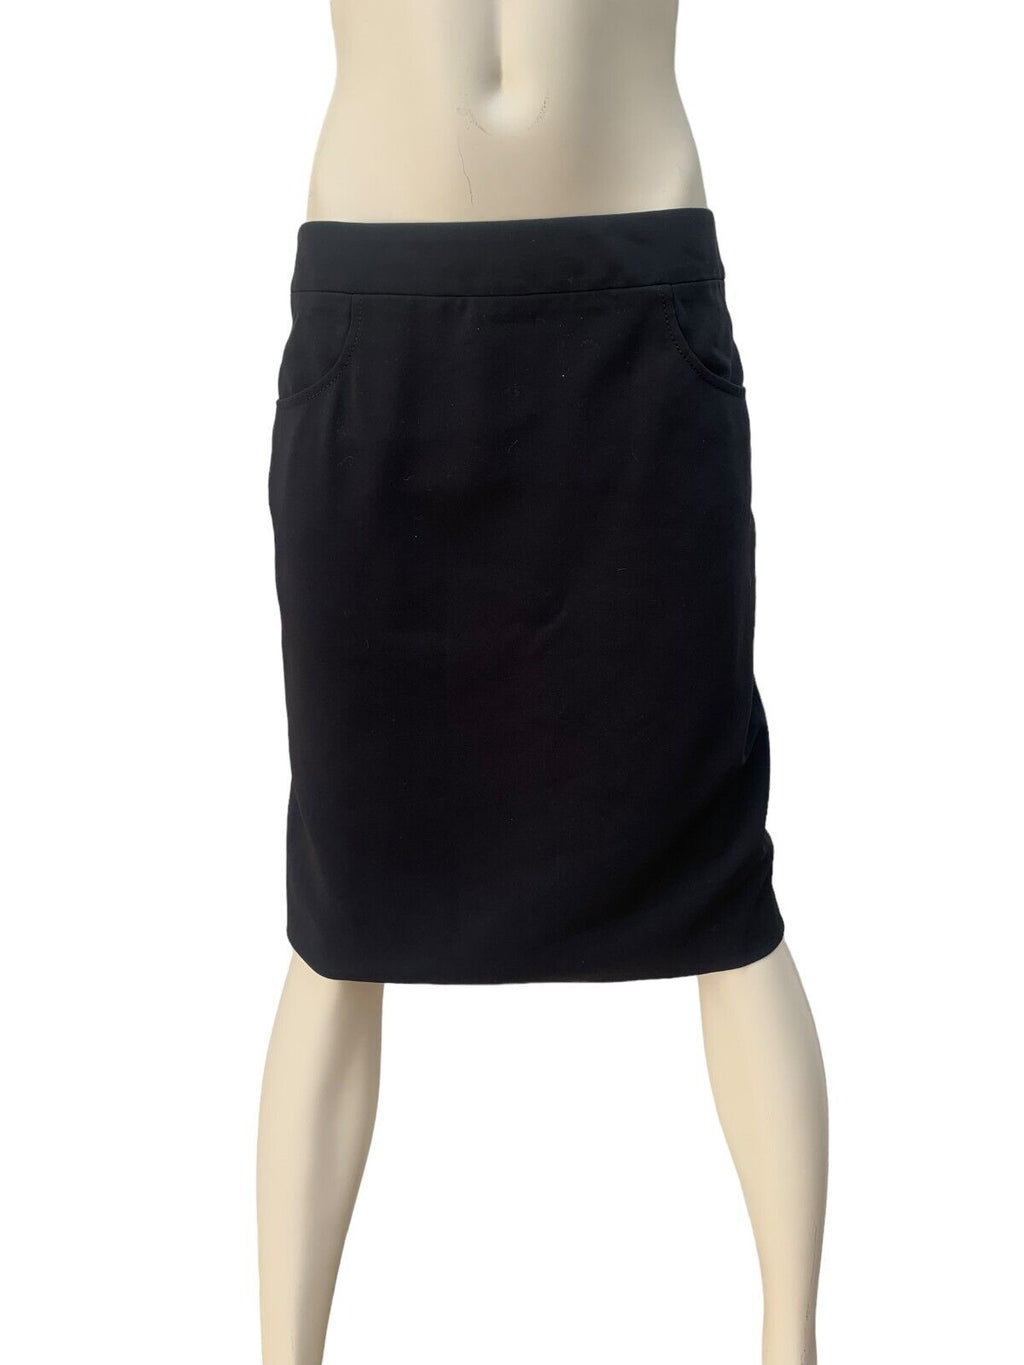 Uniform Black skirt